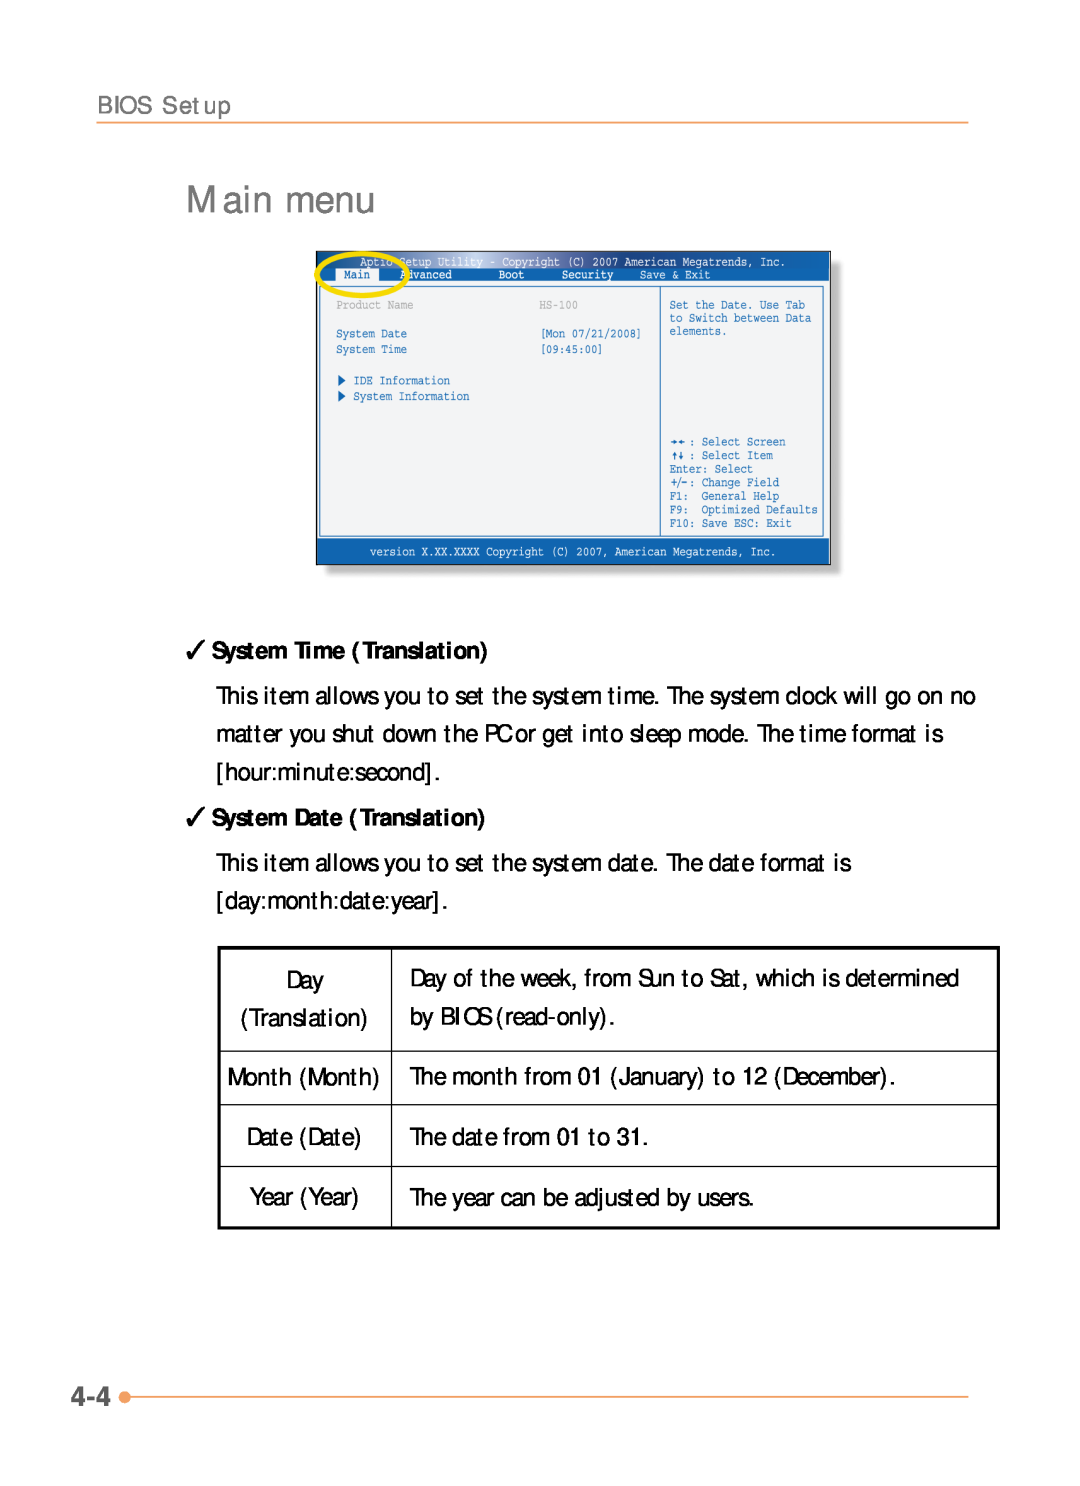 AVERATEC N1000 Series manual Main menu, System Time Translation, System Date Translation 